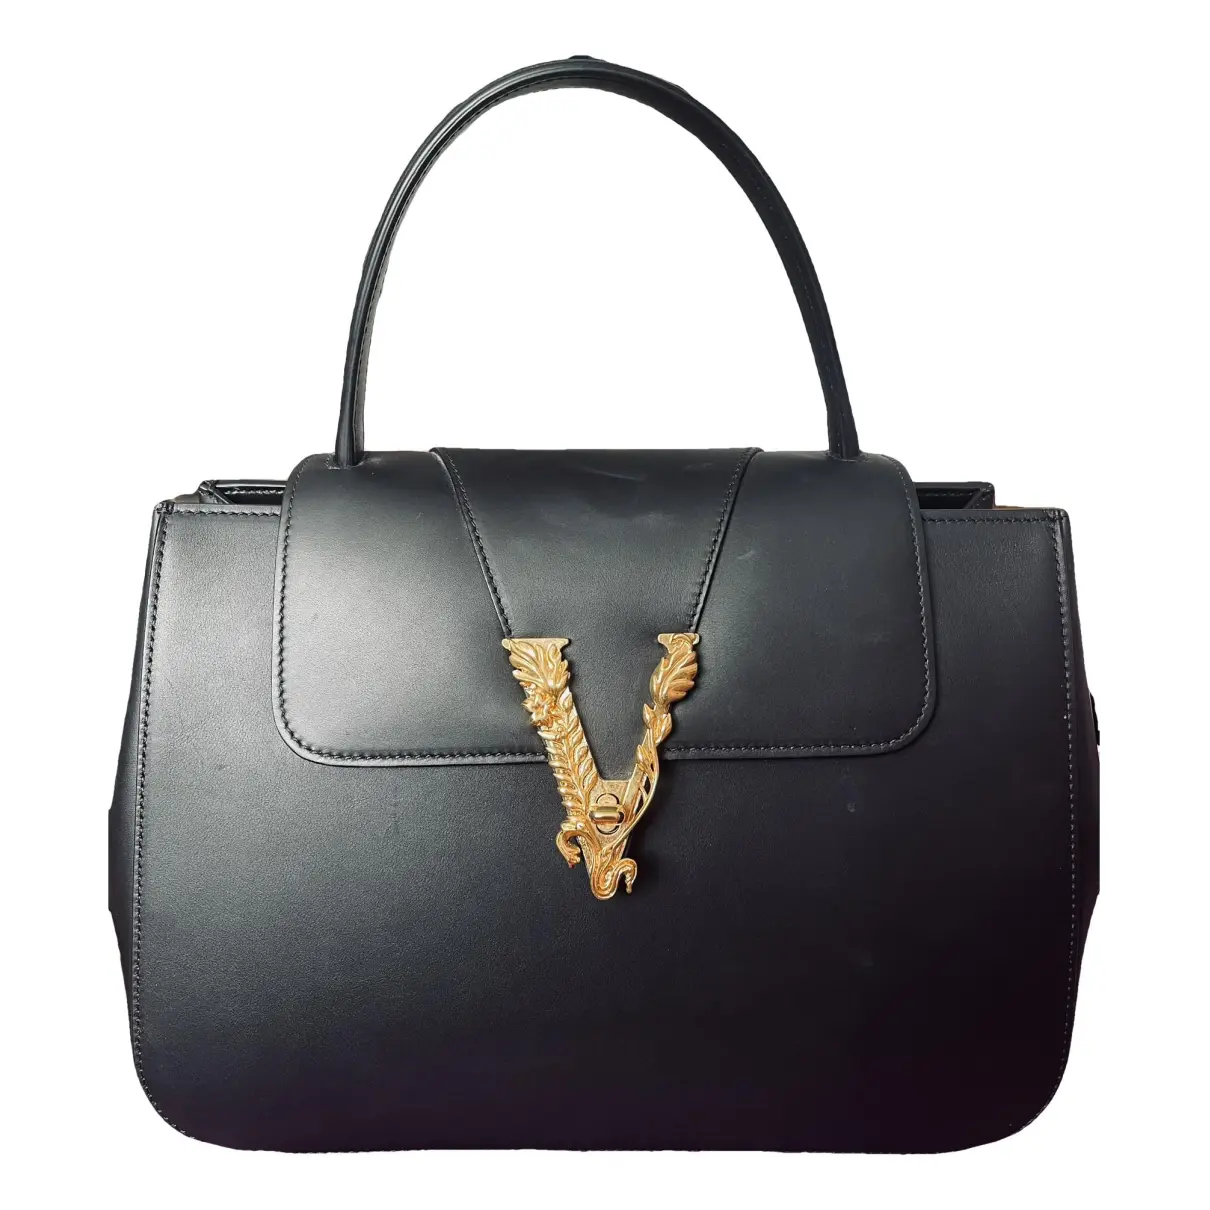 Virtus leather handbag